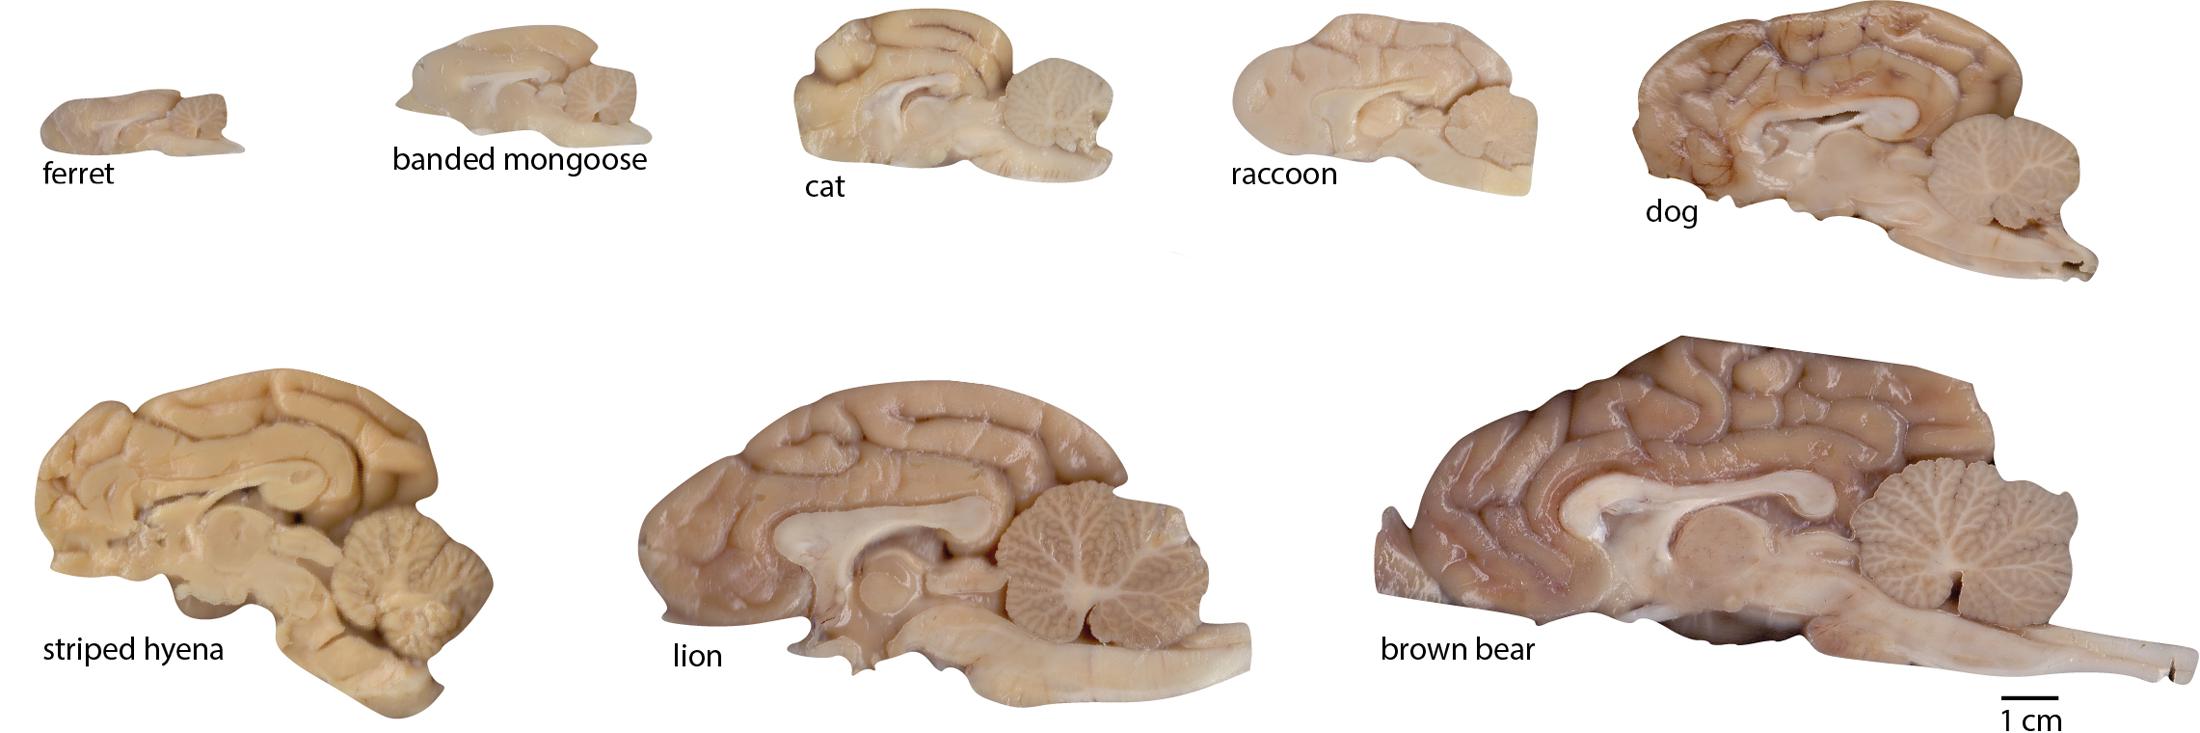 cat brain size